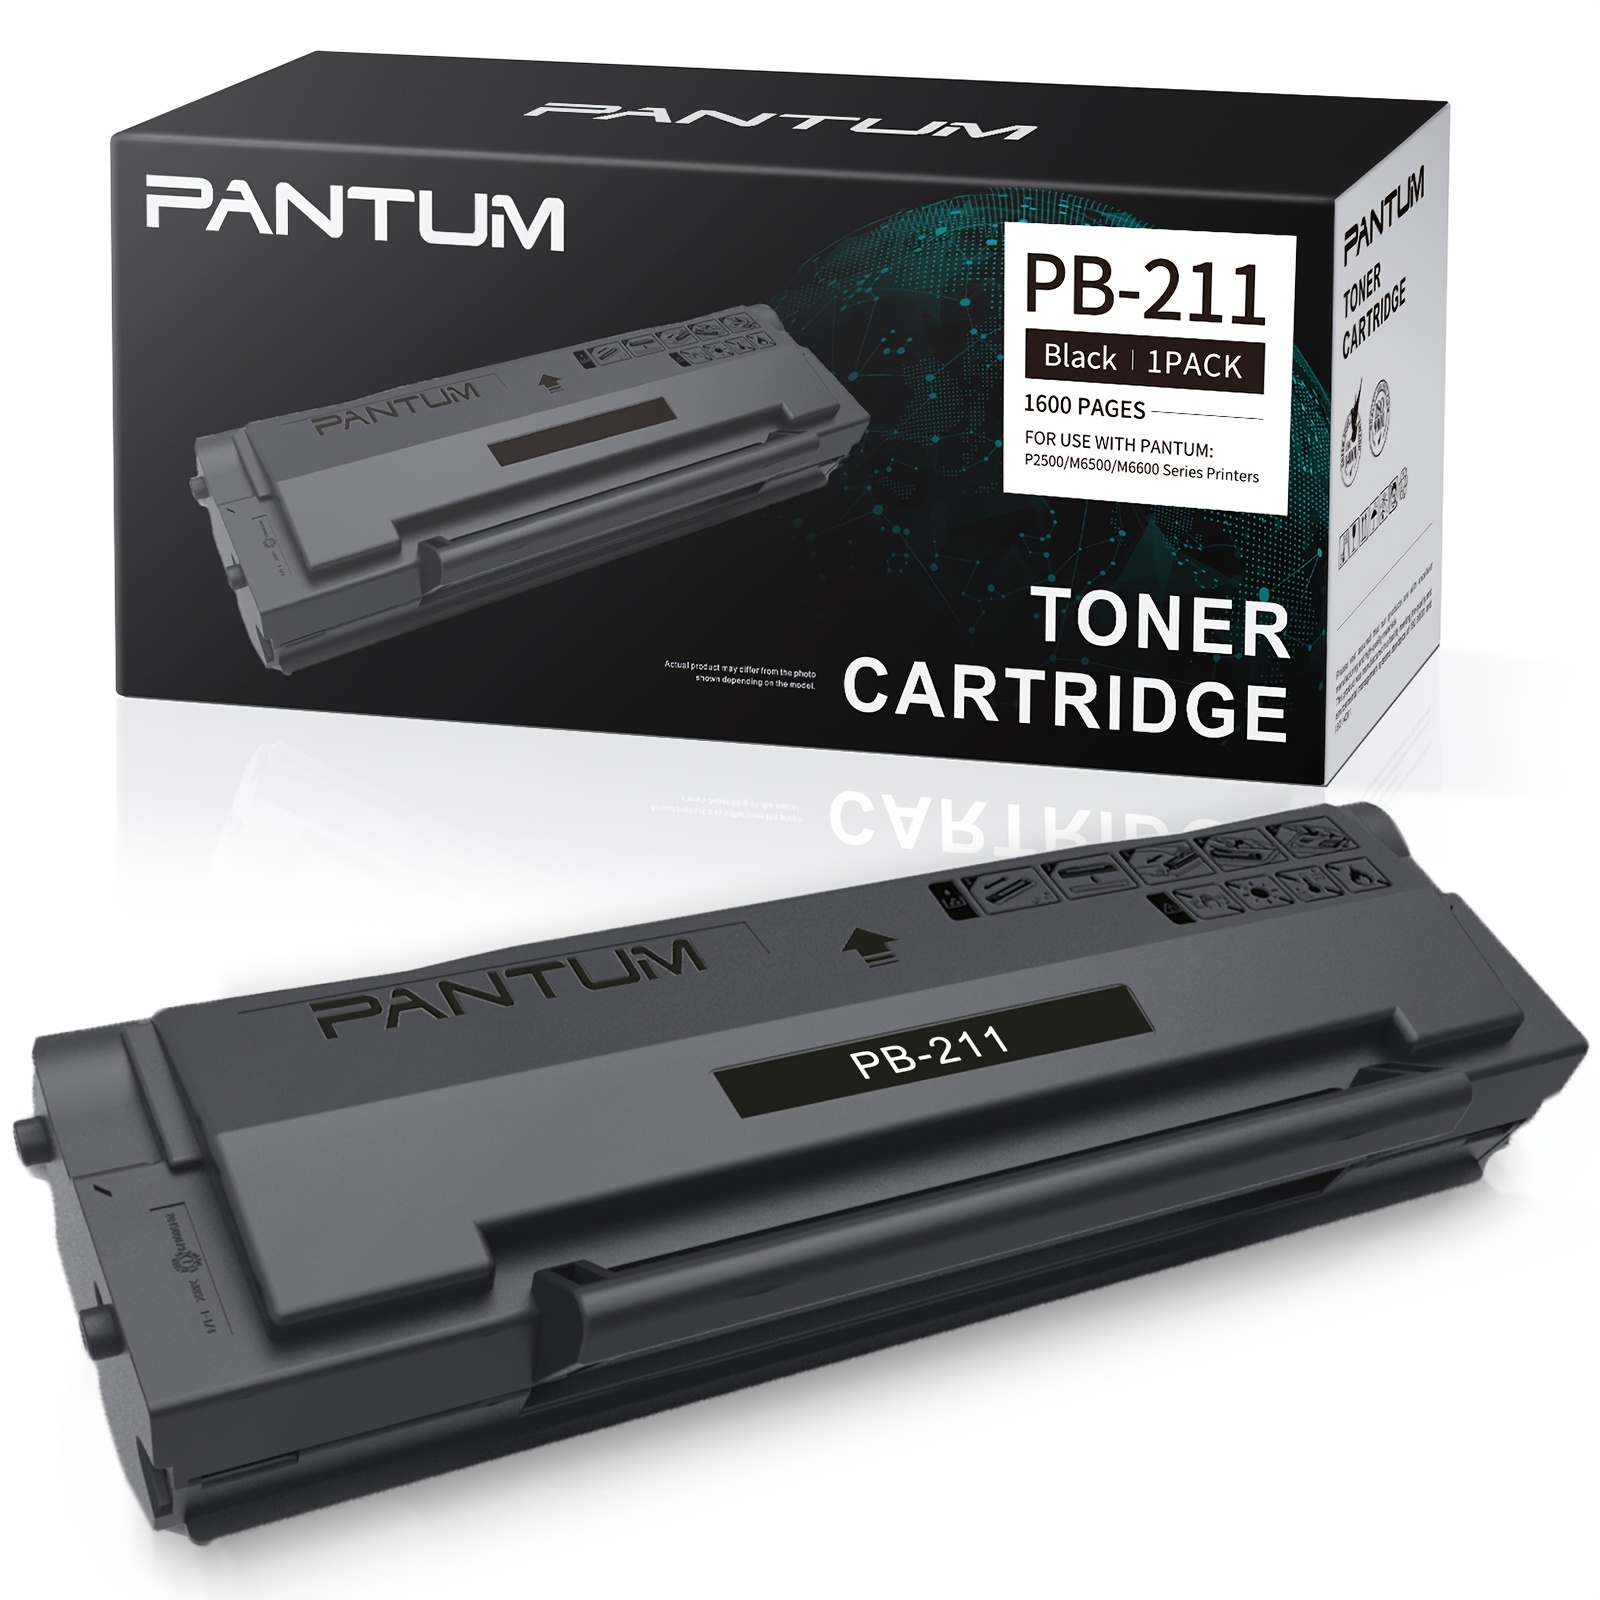 

Pb-211 Black Toner Cartridge Compatible P2200, P2500w, , M6500nw, M6550nw, M6552nw, M6600nw, M6602nw Series, Yeilds Up To 1600 Pages